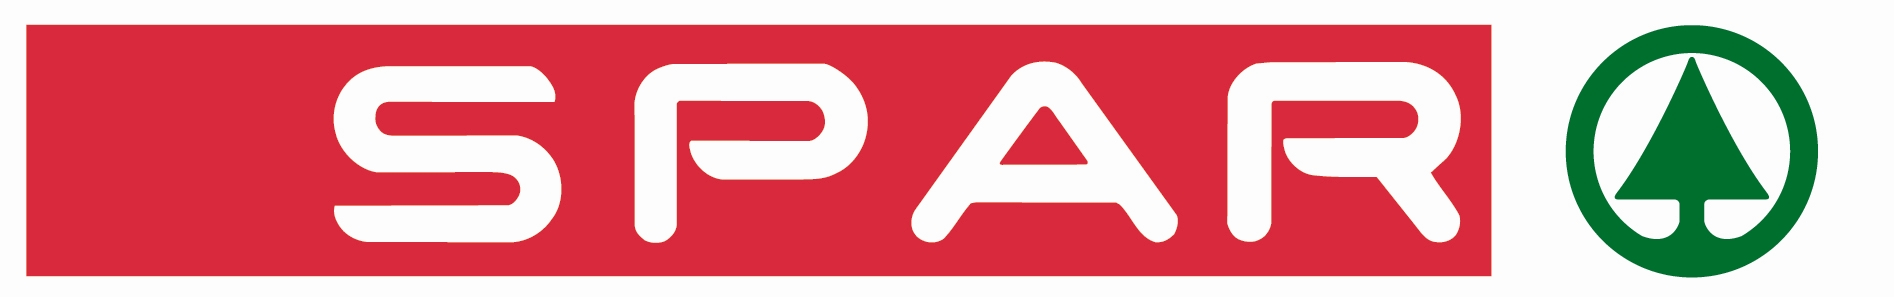 SPAR Logo - SPAR Archives - Henderson Group